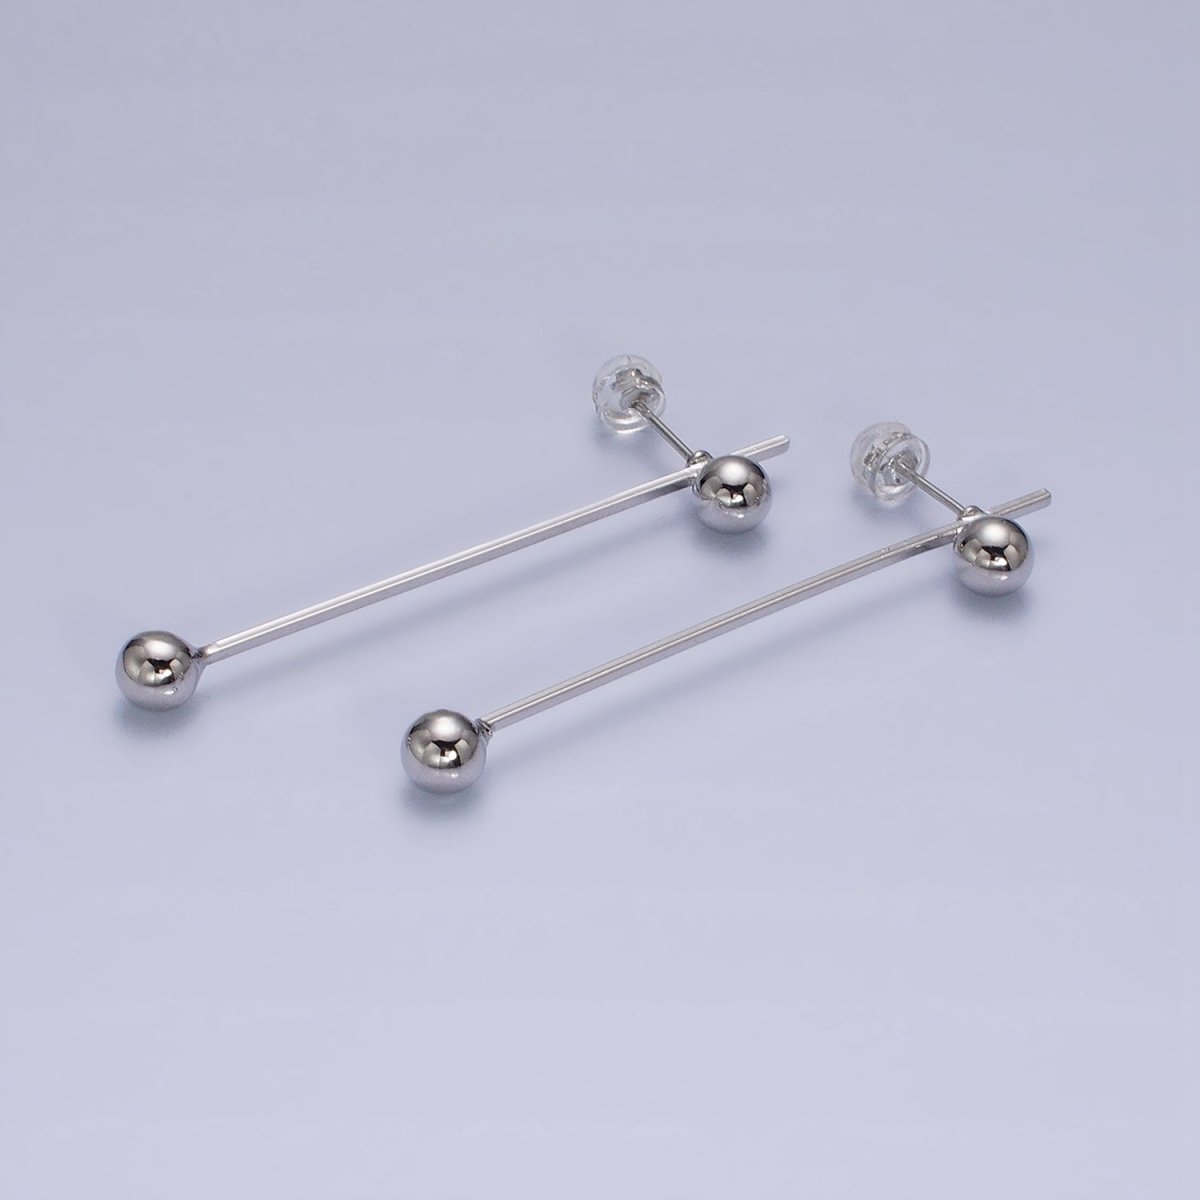 16K Gold Filled Double Bubble Bead Geometric Linear Drop Stud Earrings in Gold & Silver | AD1145 AD1146 - DLUXCA